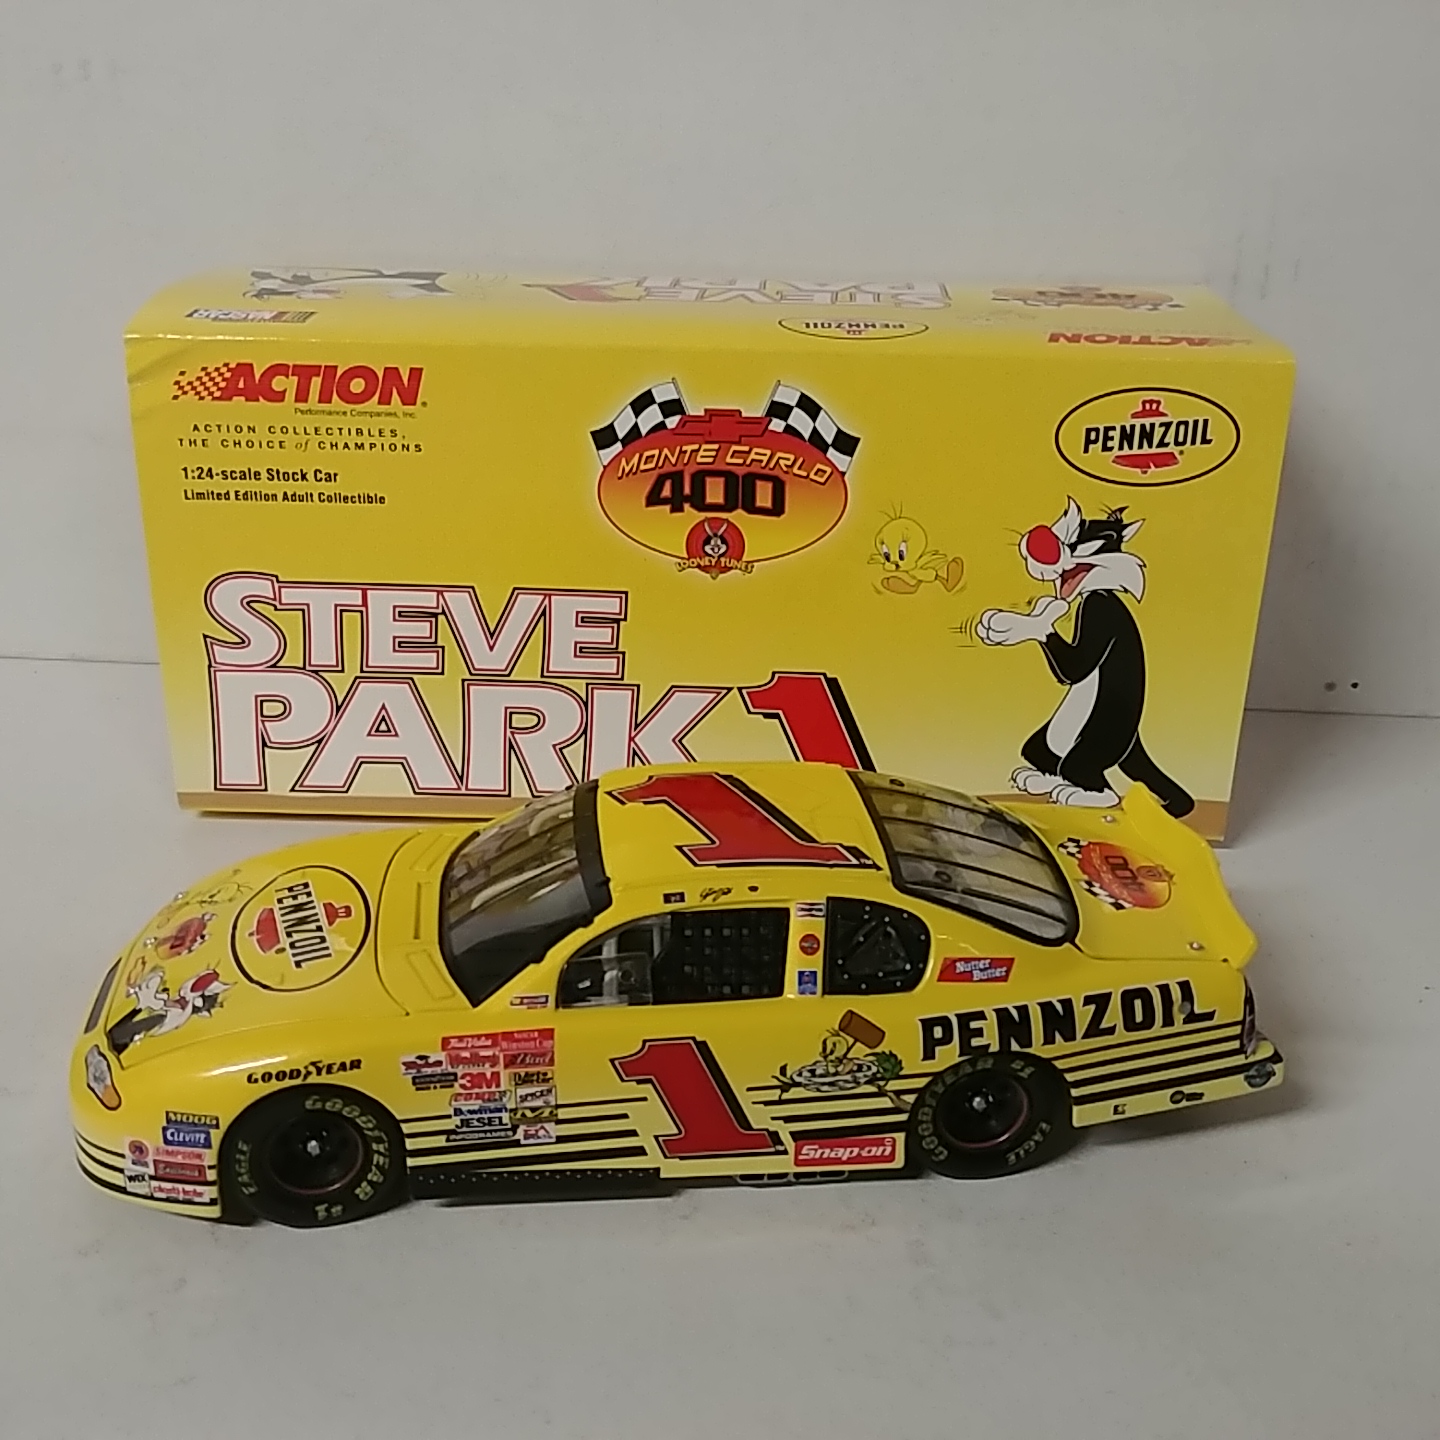 2001 Steve Park 1/24th Pennzoil "Looney Tunes" c/w car